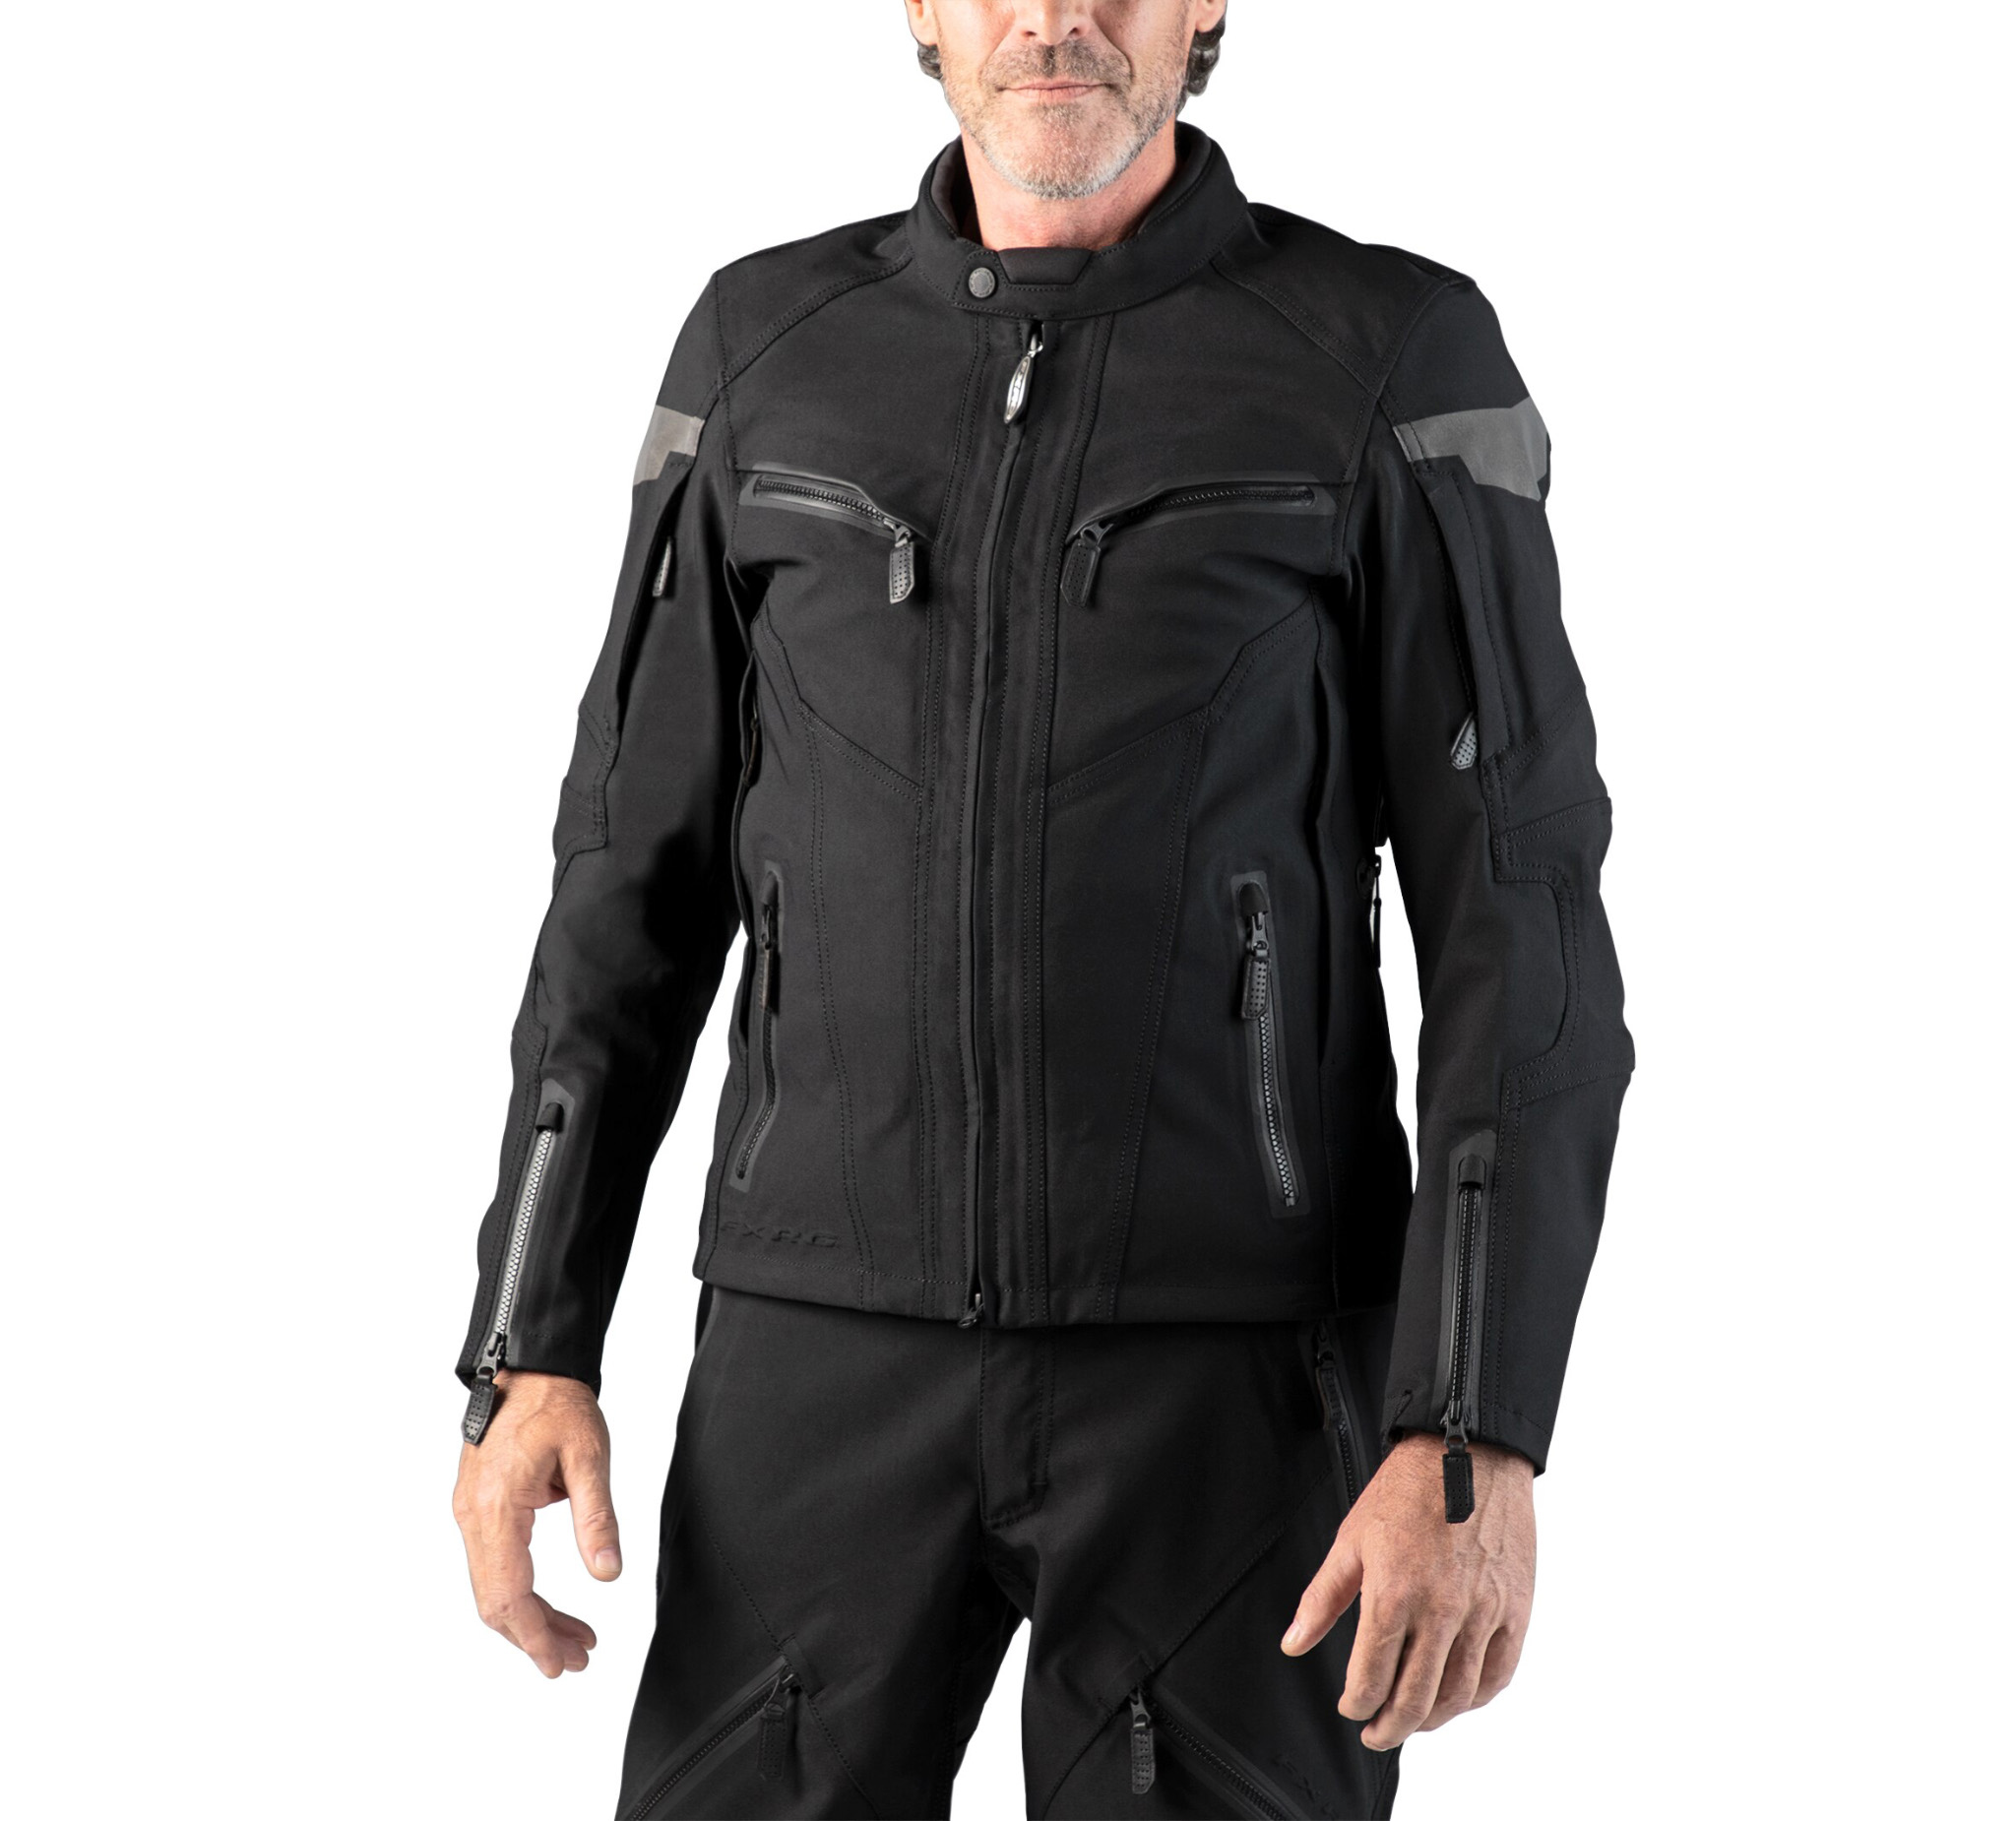 Waterproof Harley Davidson Jacket Online Store Up To 70 Off